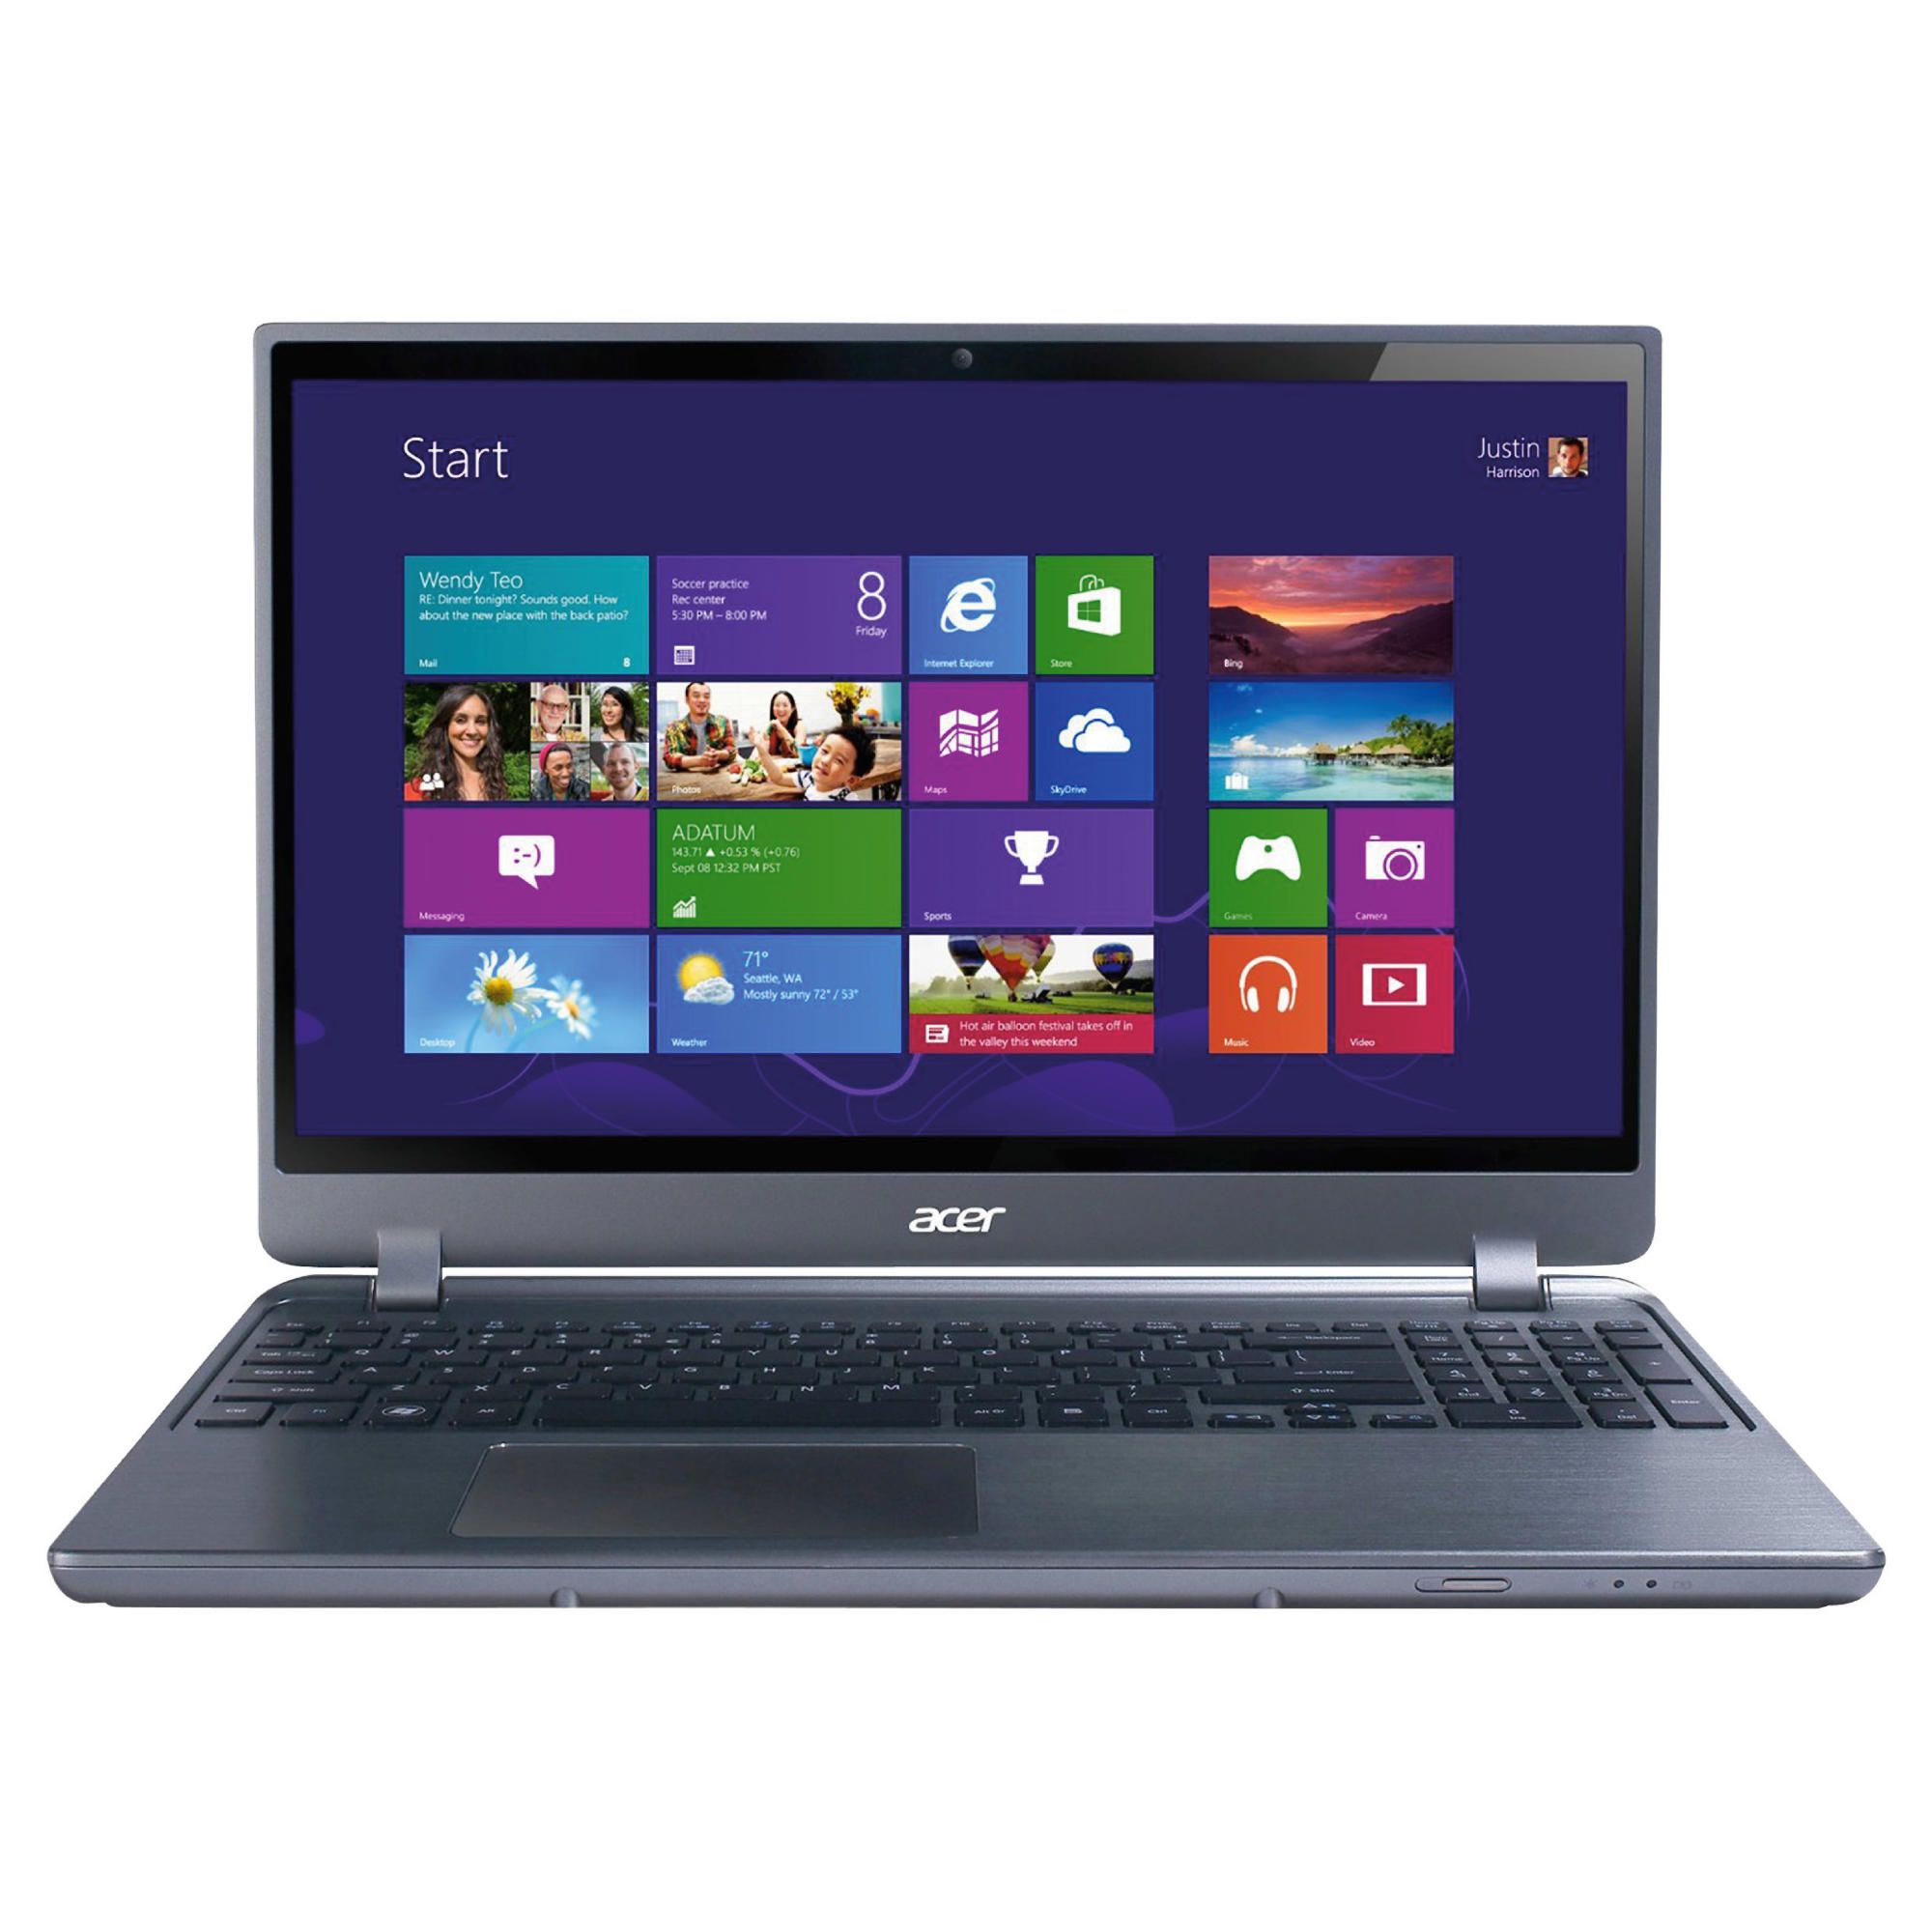 Acer Aspire Timeline Ultra M3-581PTG (15.6 inch) Ultrabook Core i5 (3317U) 1.7GHz 4GB 500GB DVD-SM DL WLAN BT Webcam Windows 8 64-bit